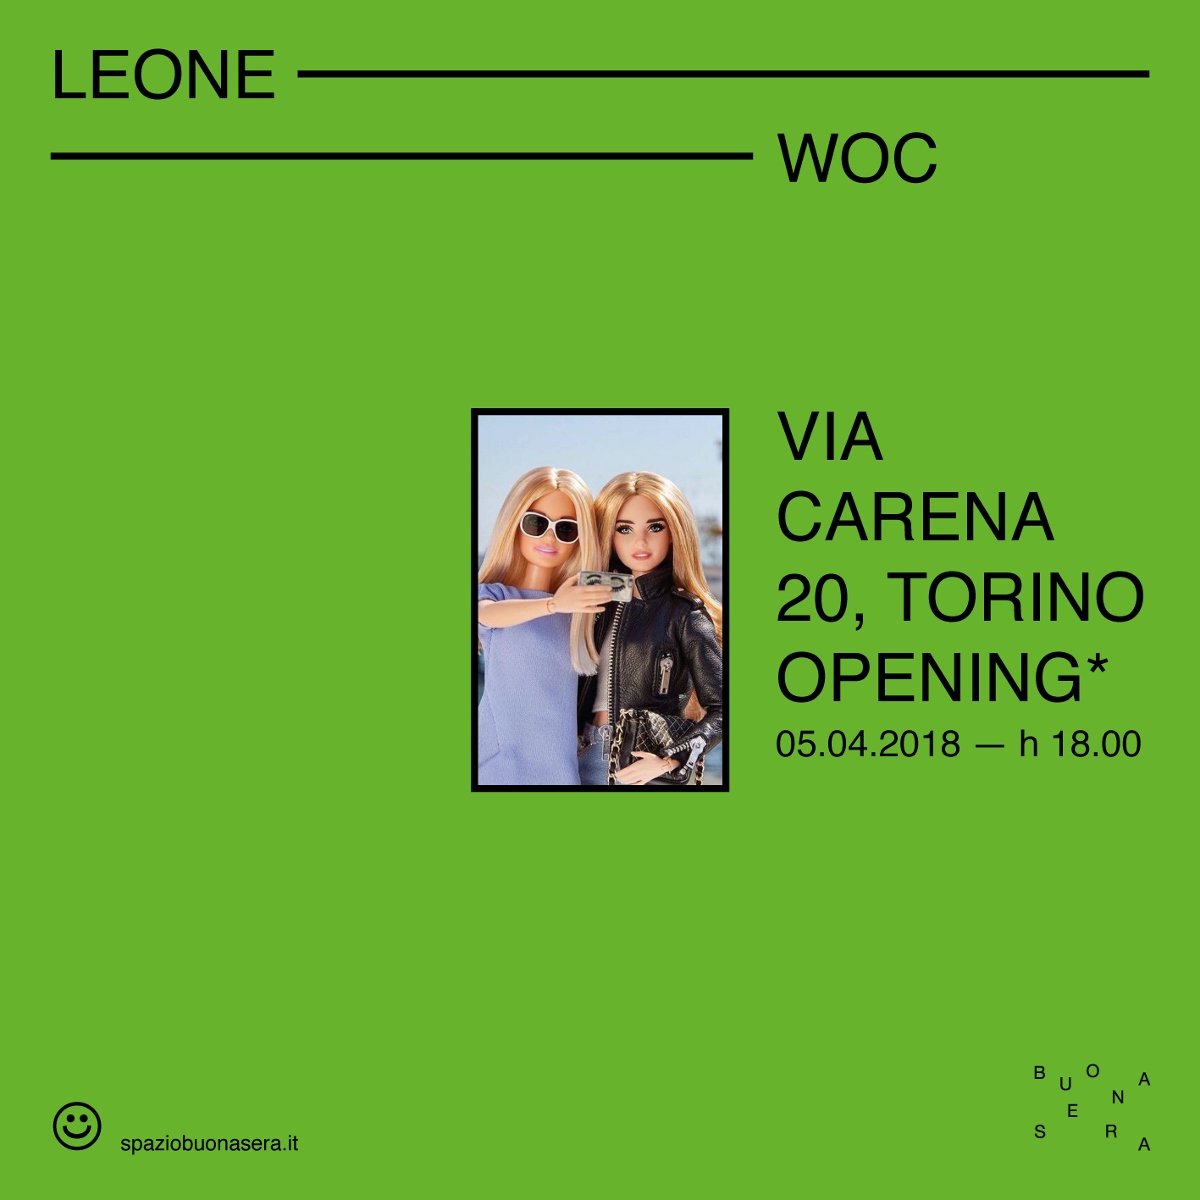 Woc - Leone